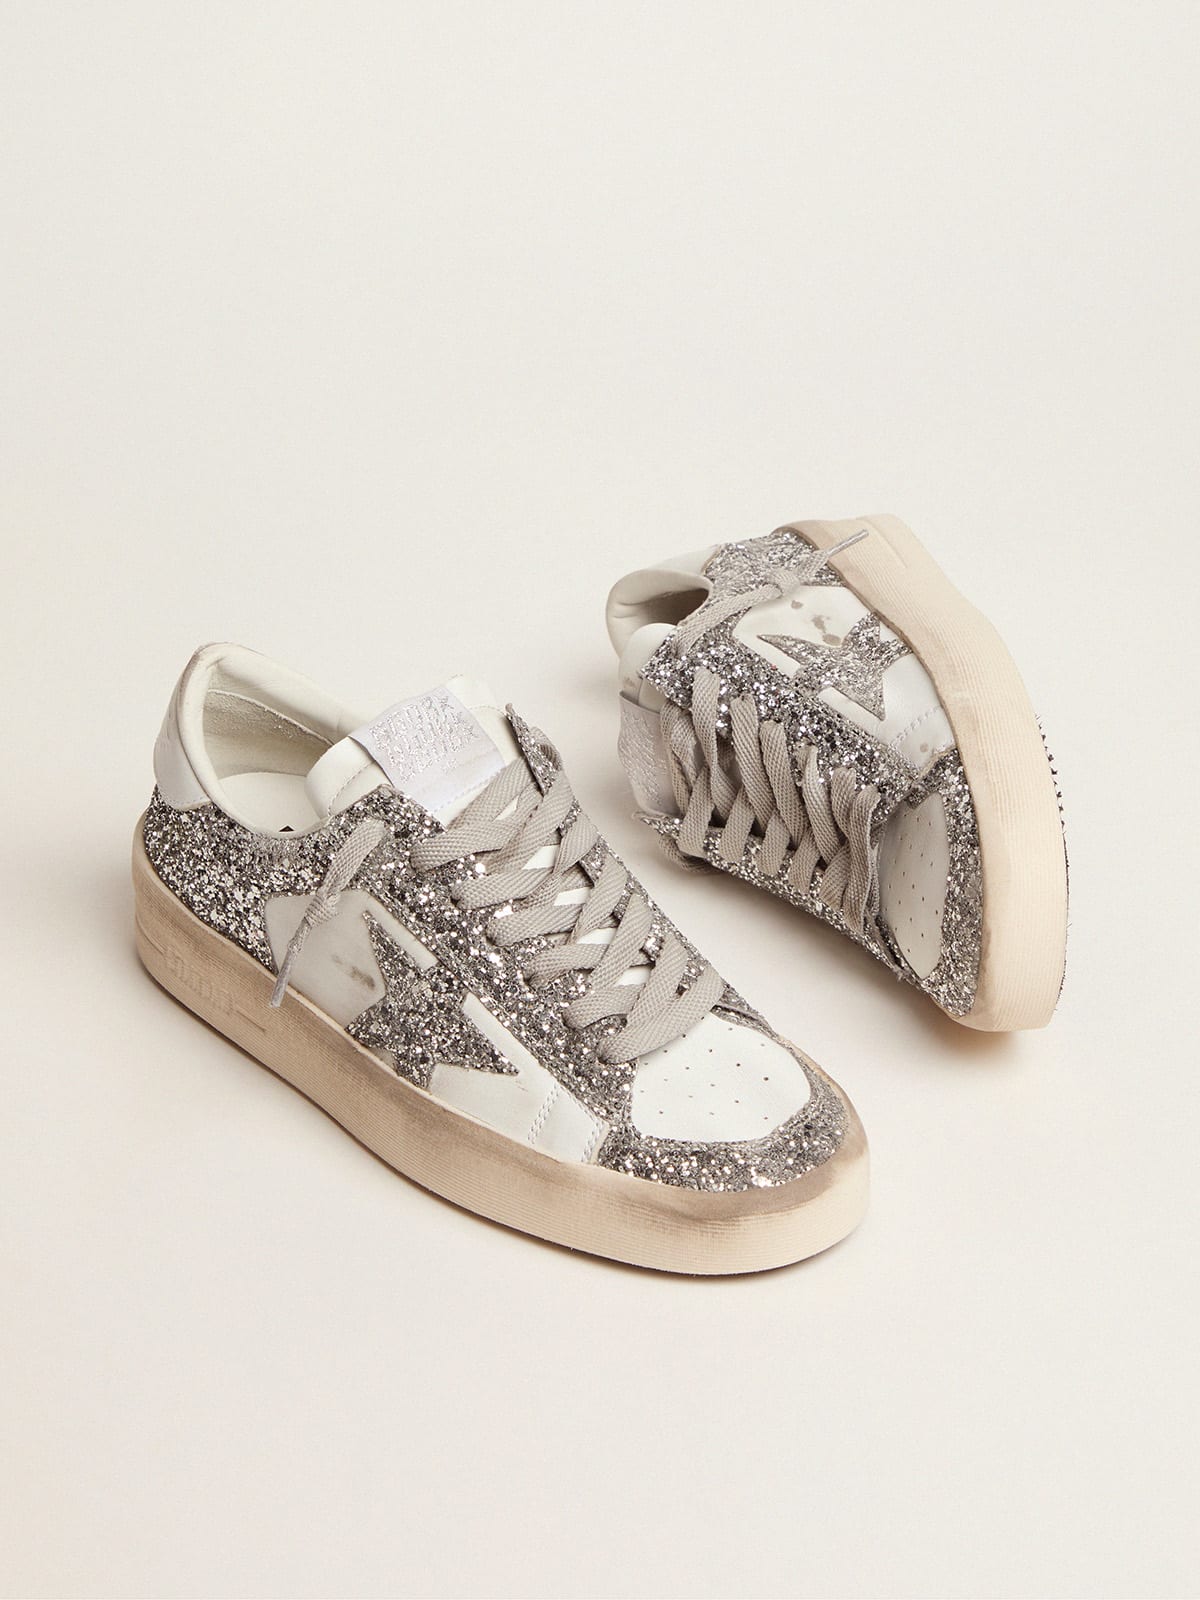 Stardan Sneakers, white leather & silver glitter